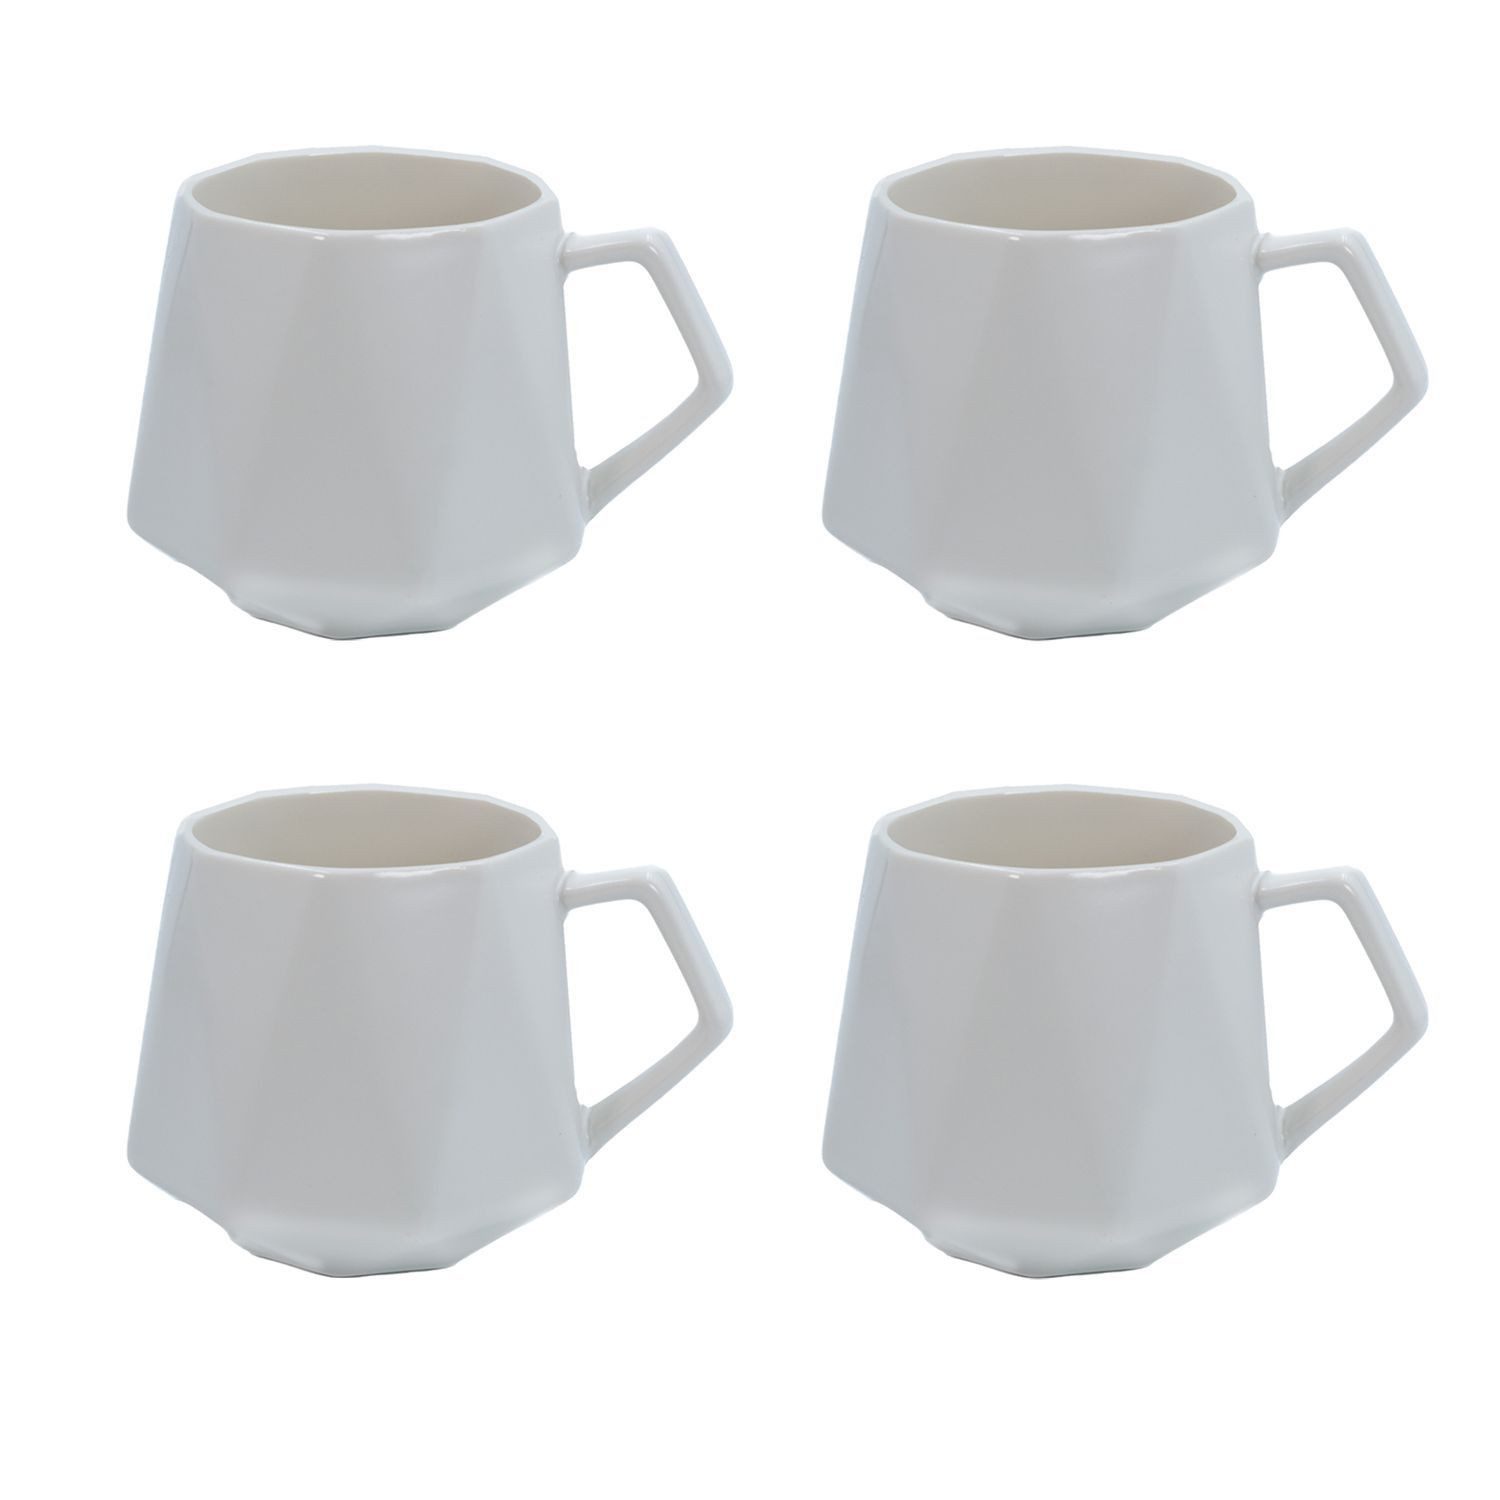 Intirilife Tasse, Keramik, Kaffee Tee Tasse in Feinschliff Optik 350 ml - 13 x 10.5 x 9.2 cm